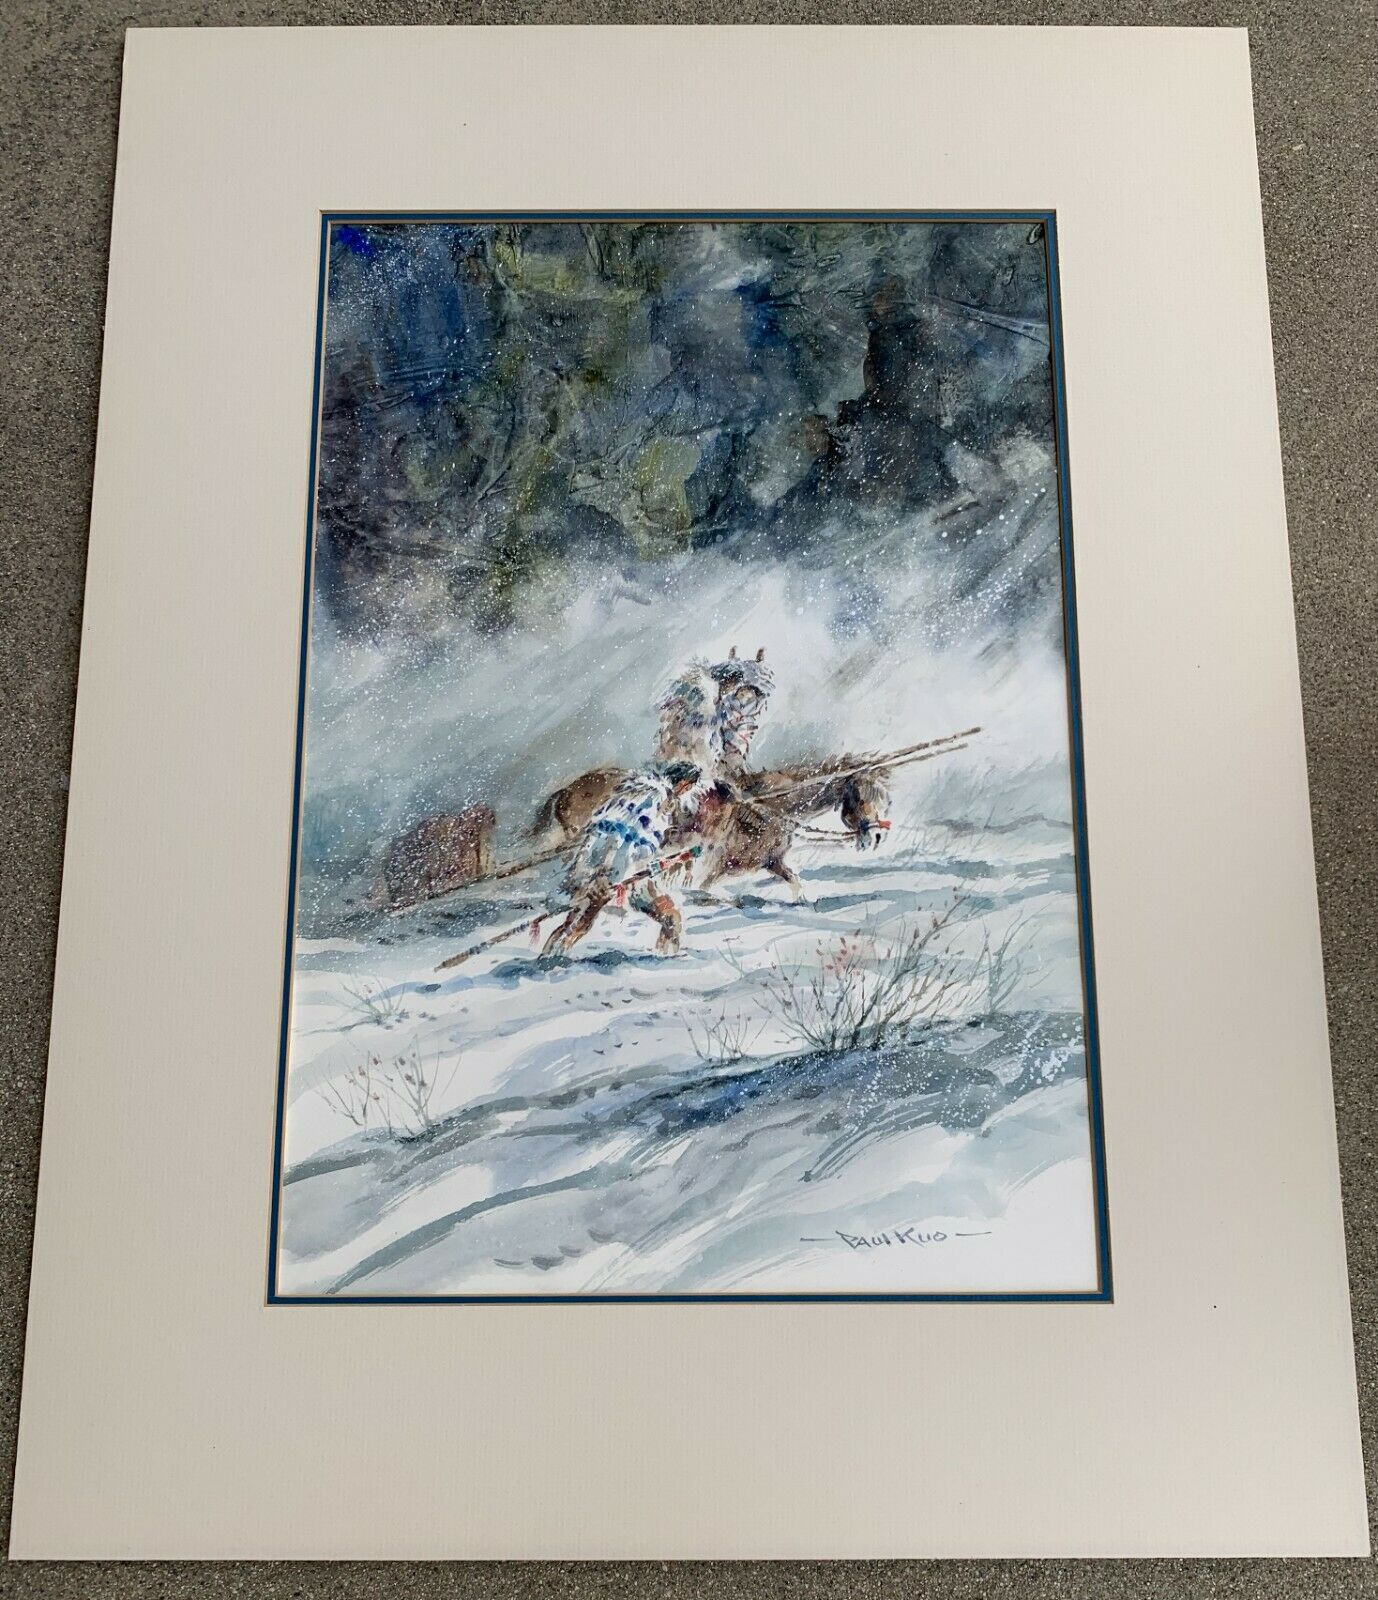 Paul Kuo " American Indians Winter Scene" Original Watercolor Painting. 22"x15"